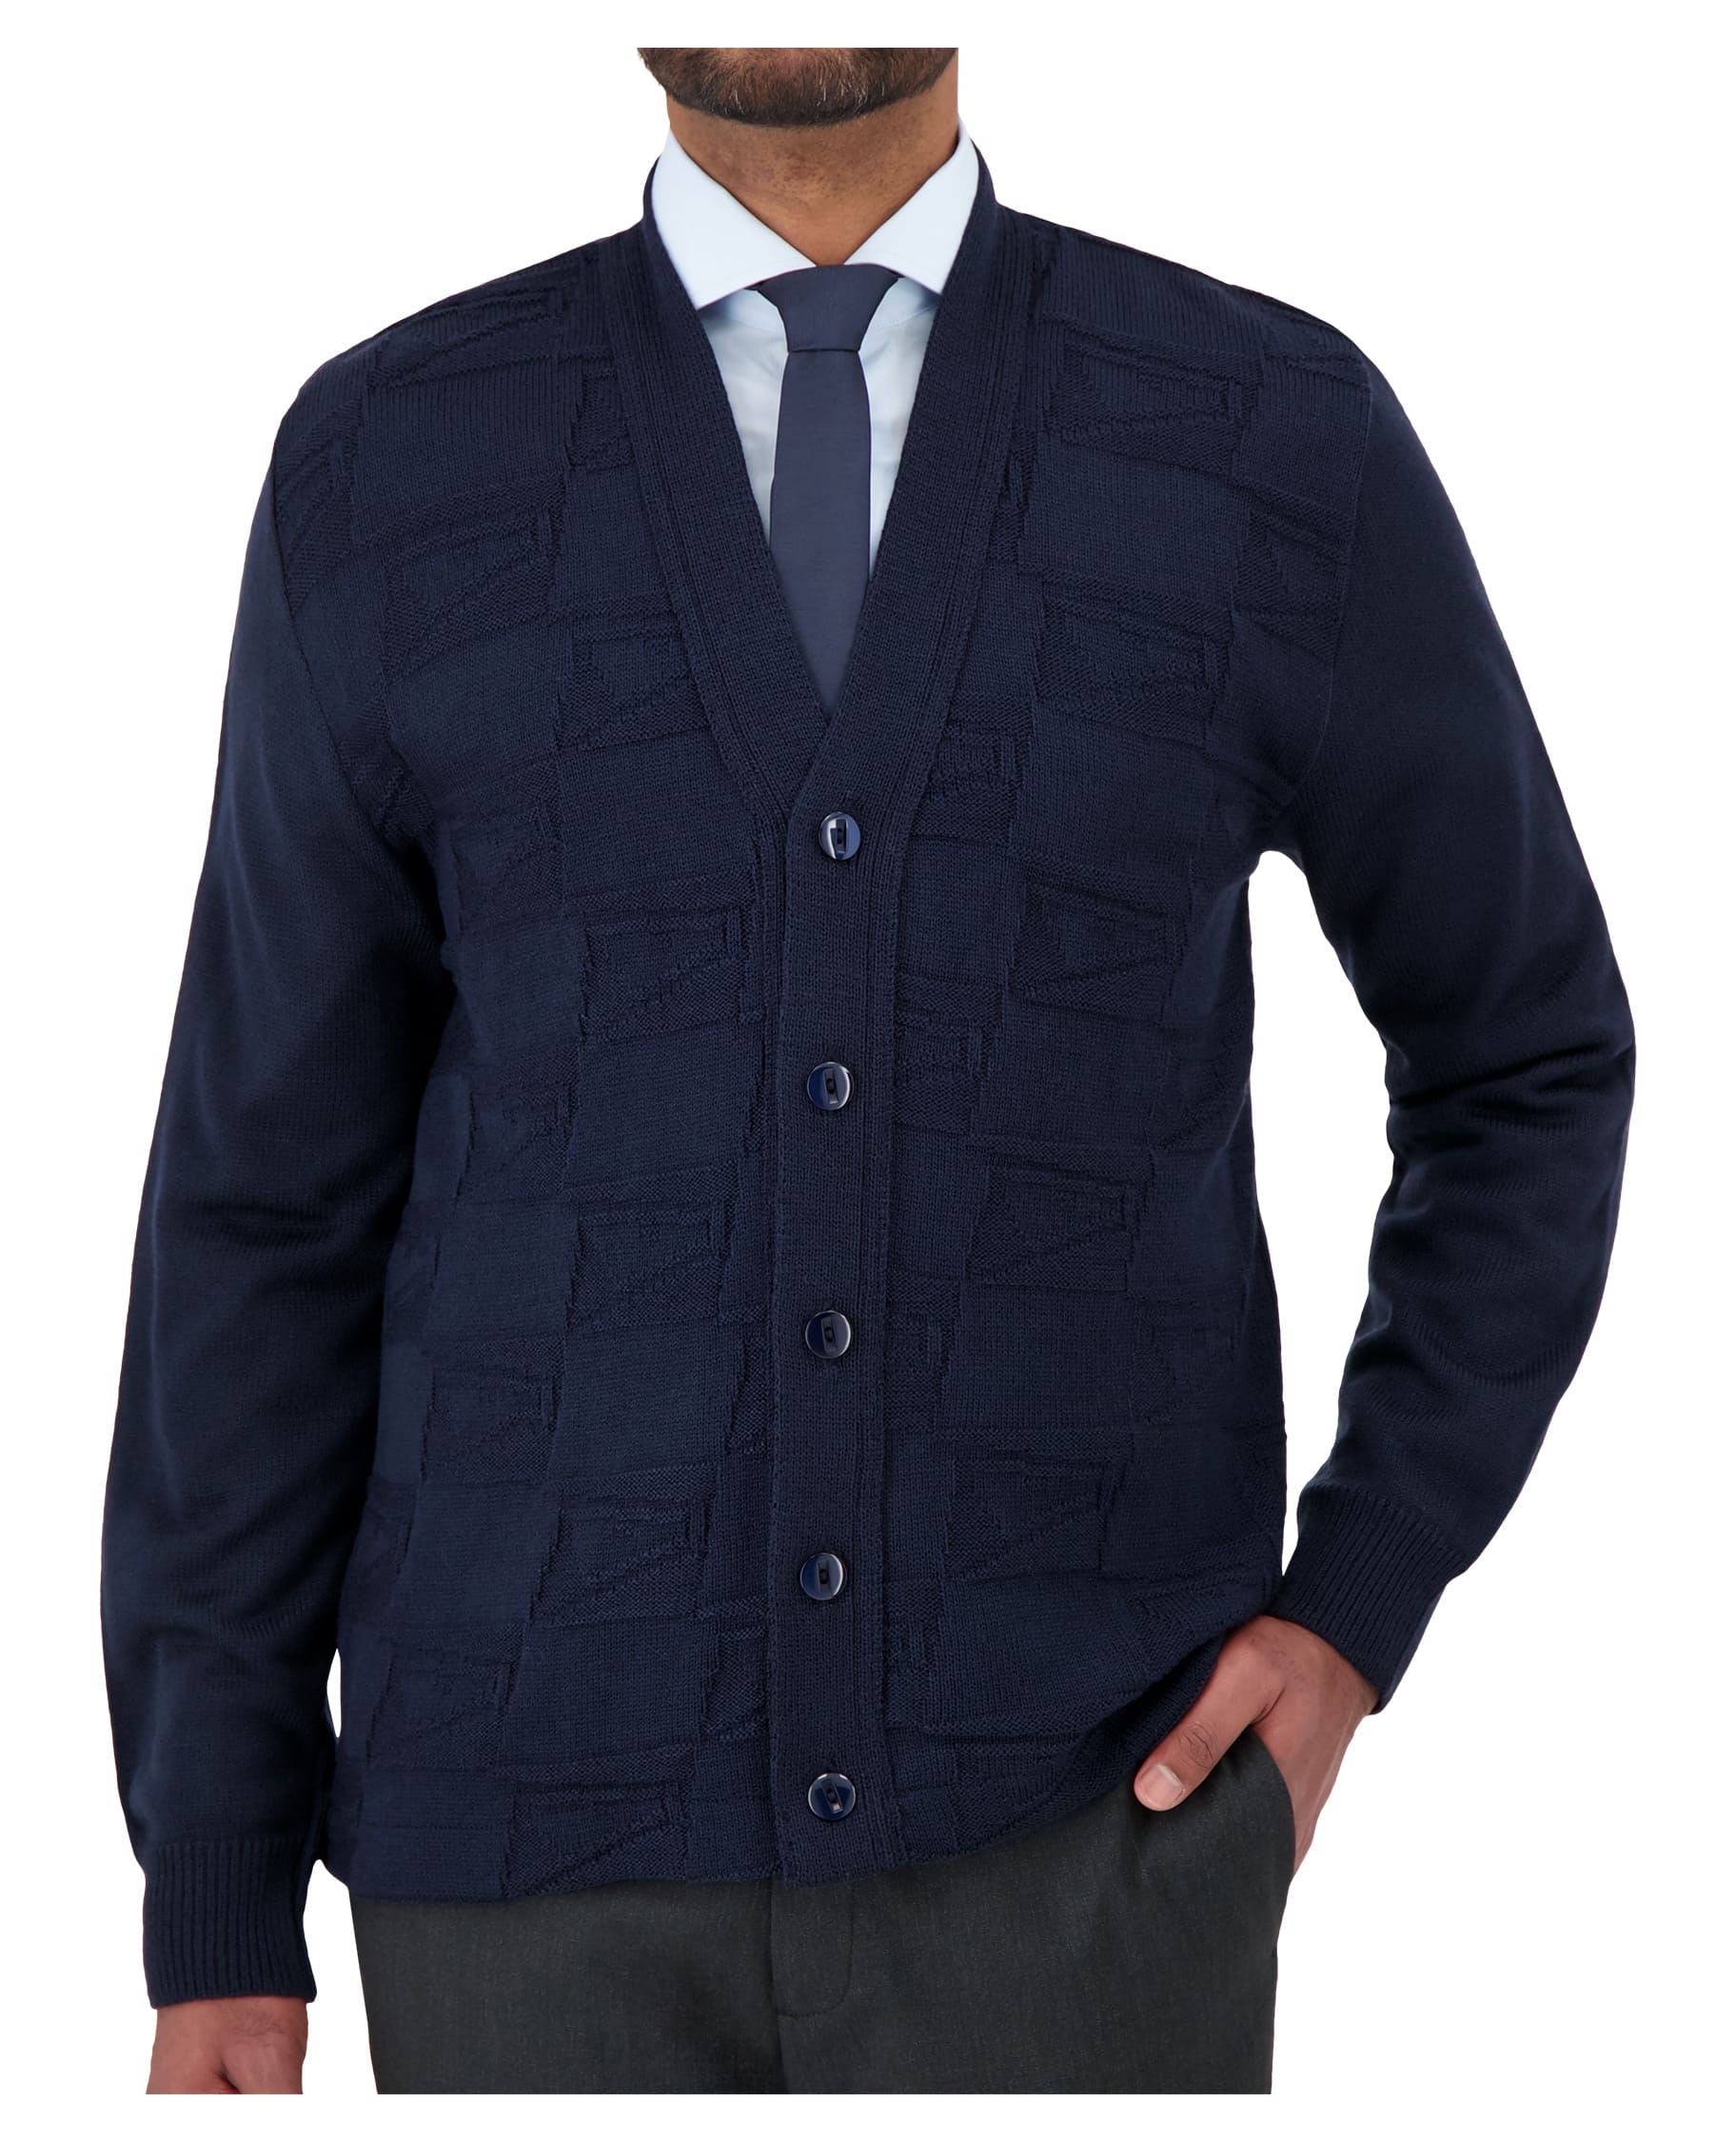 blue v-neck button down uniform cardigan